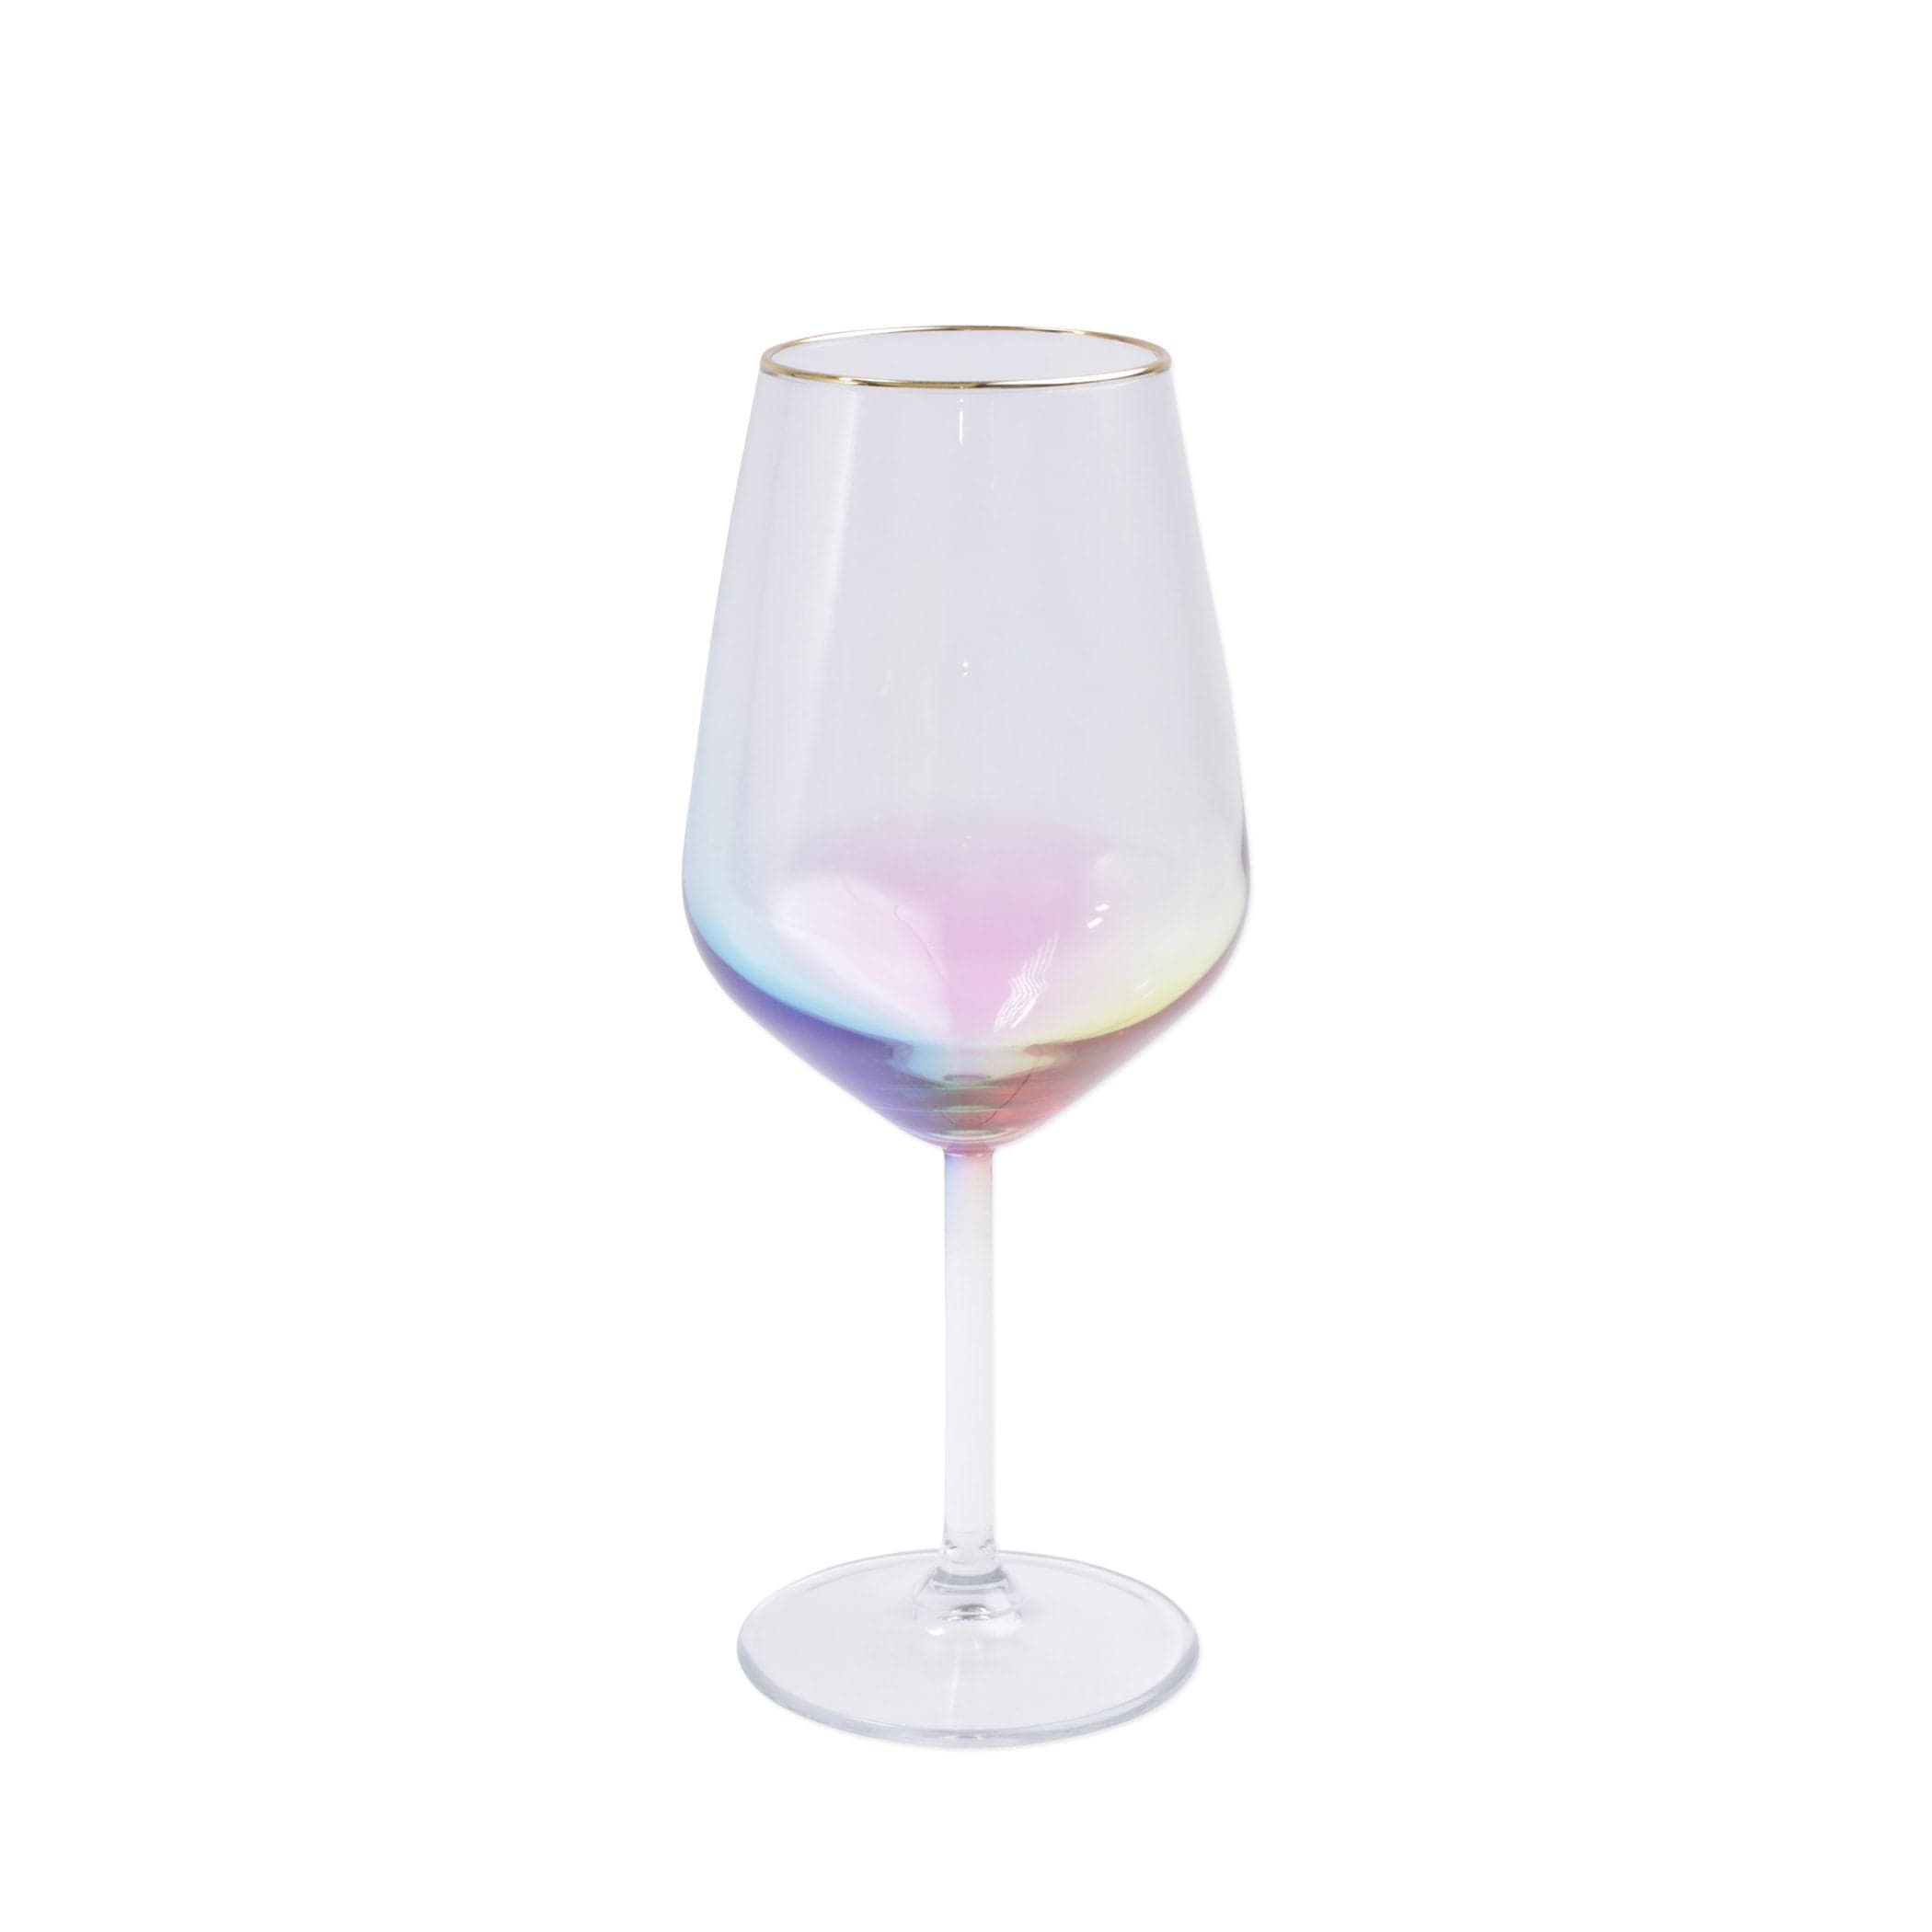 Rainbow Assorted Margarita Glasses - Set of 4 – VIETRI